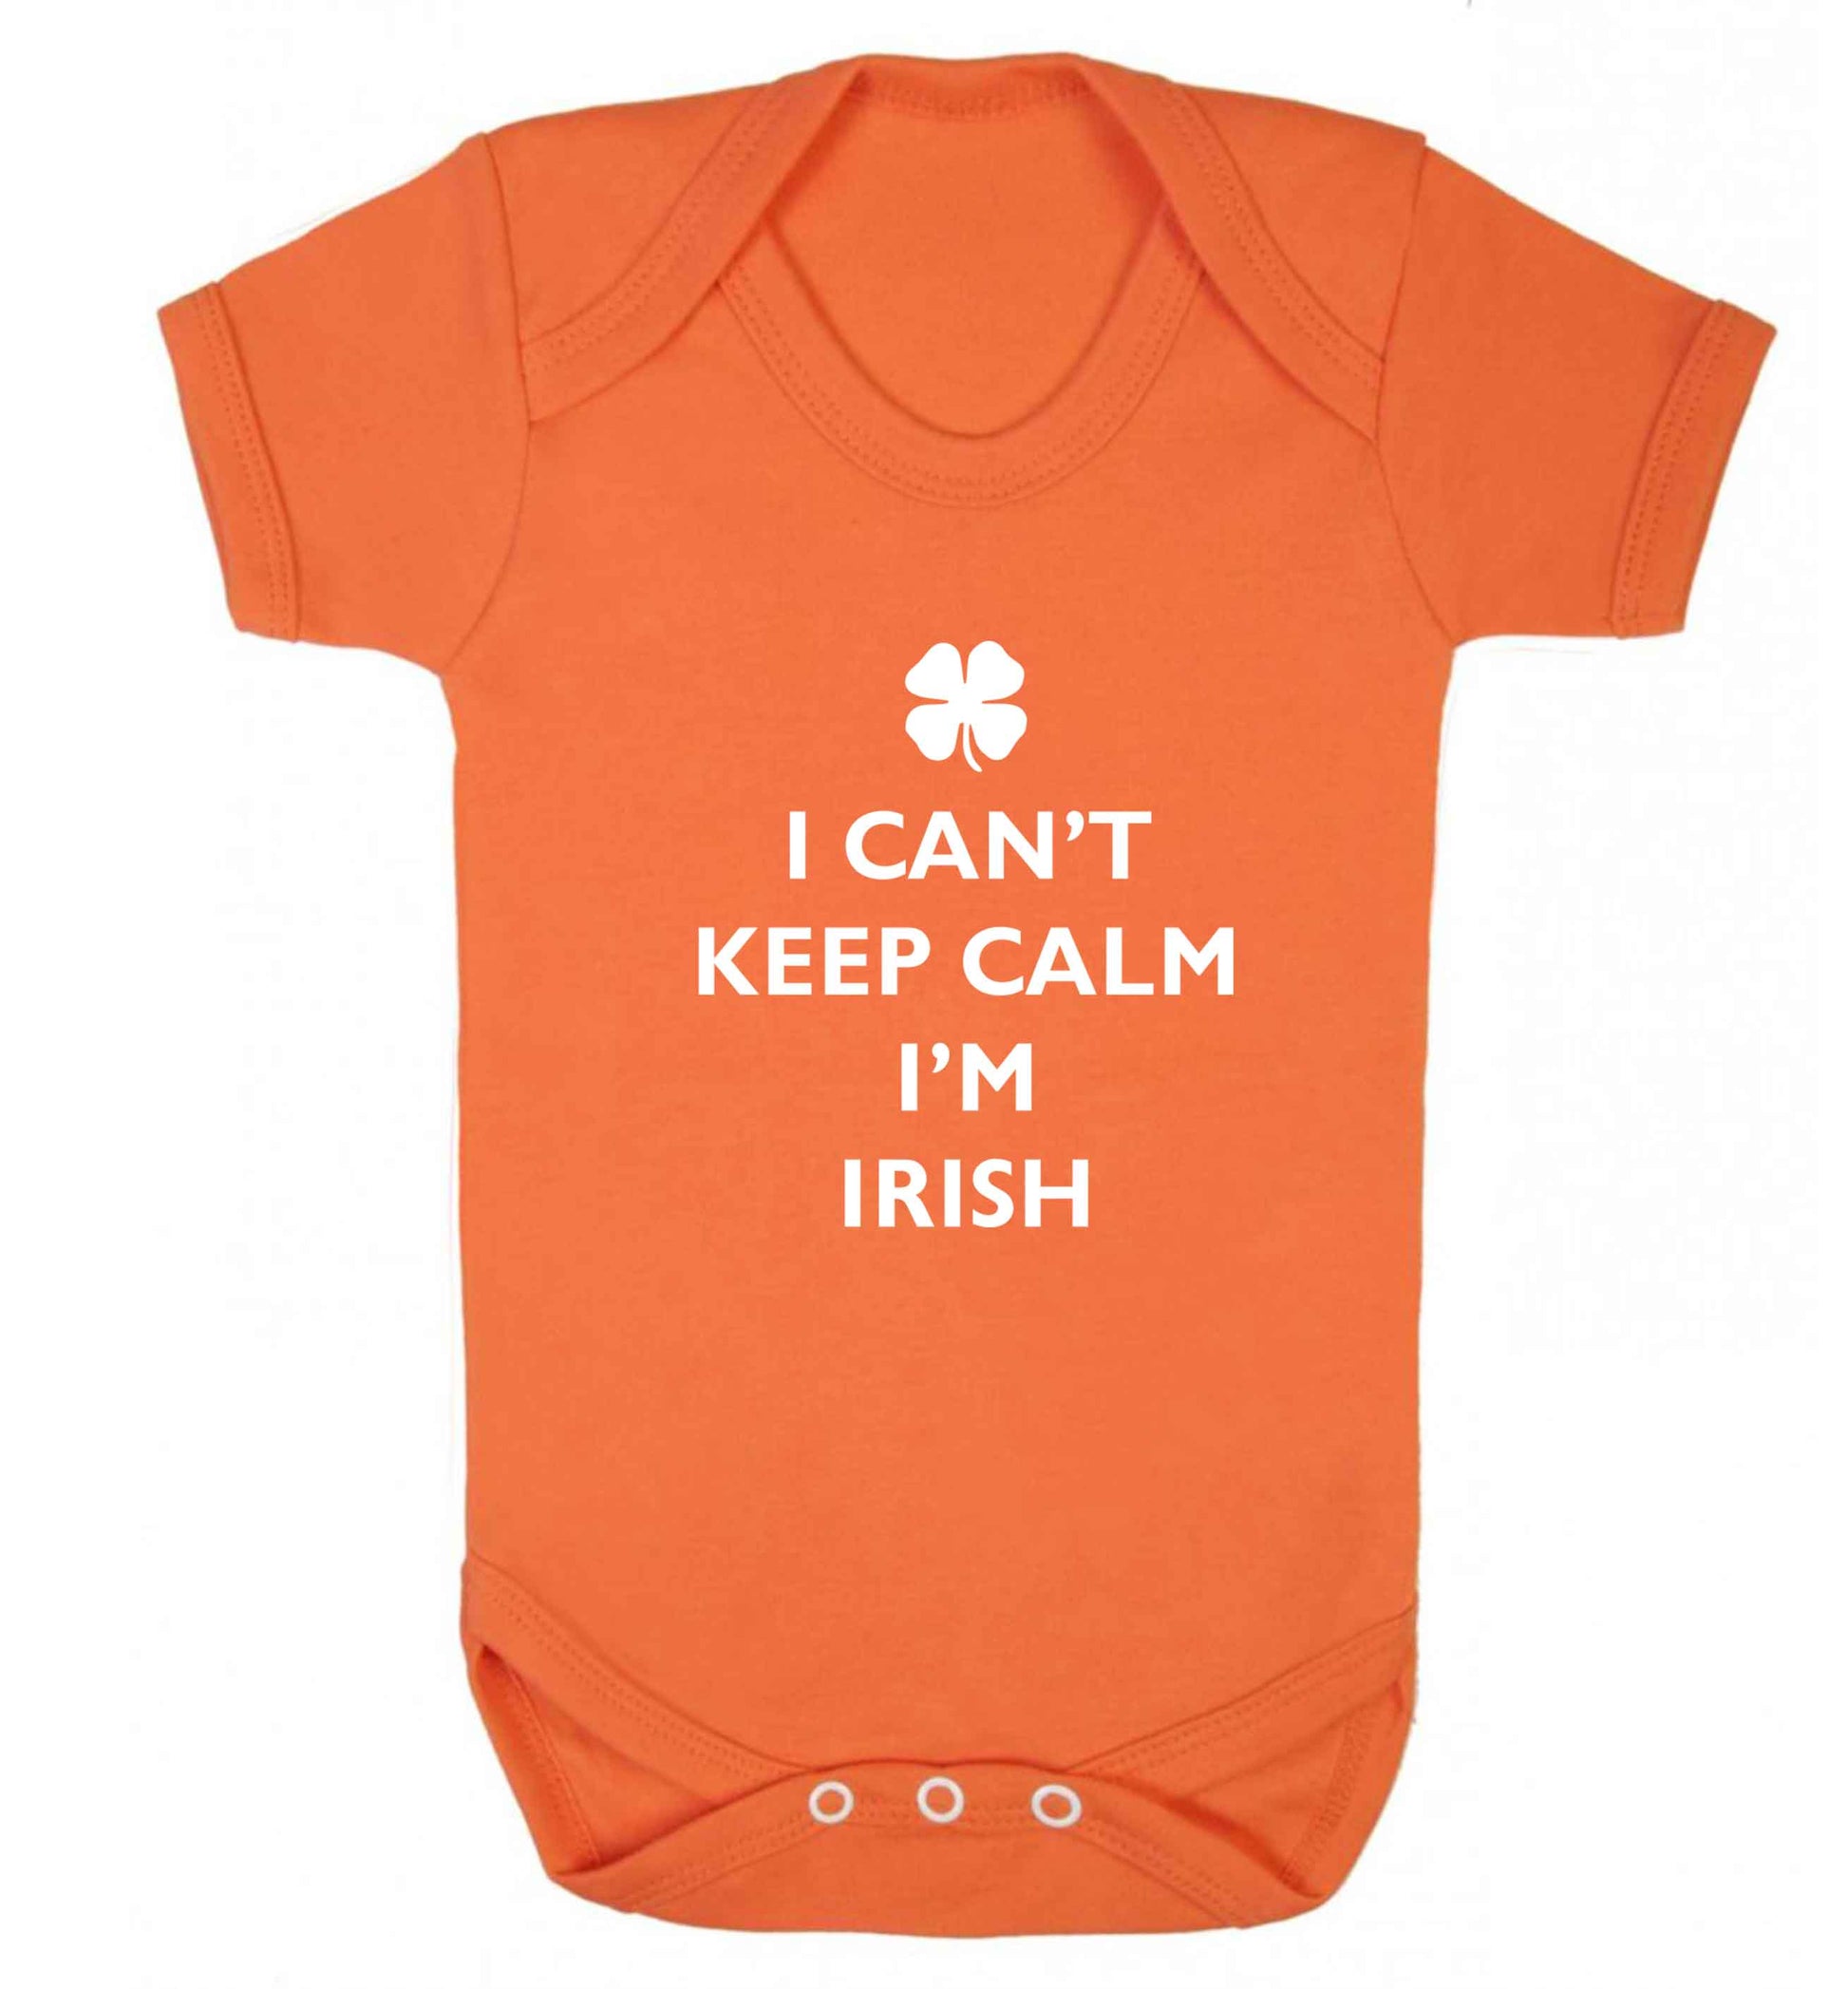 I can't keep calm I'm Irish baby vest orange 18-24 months